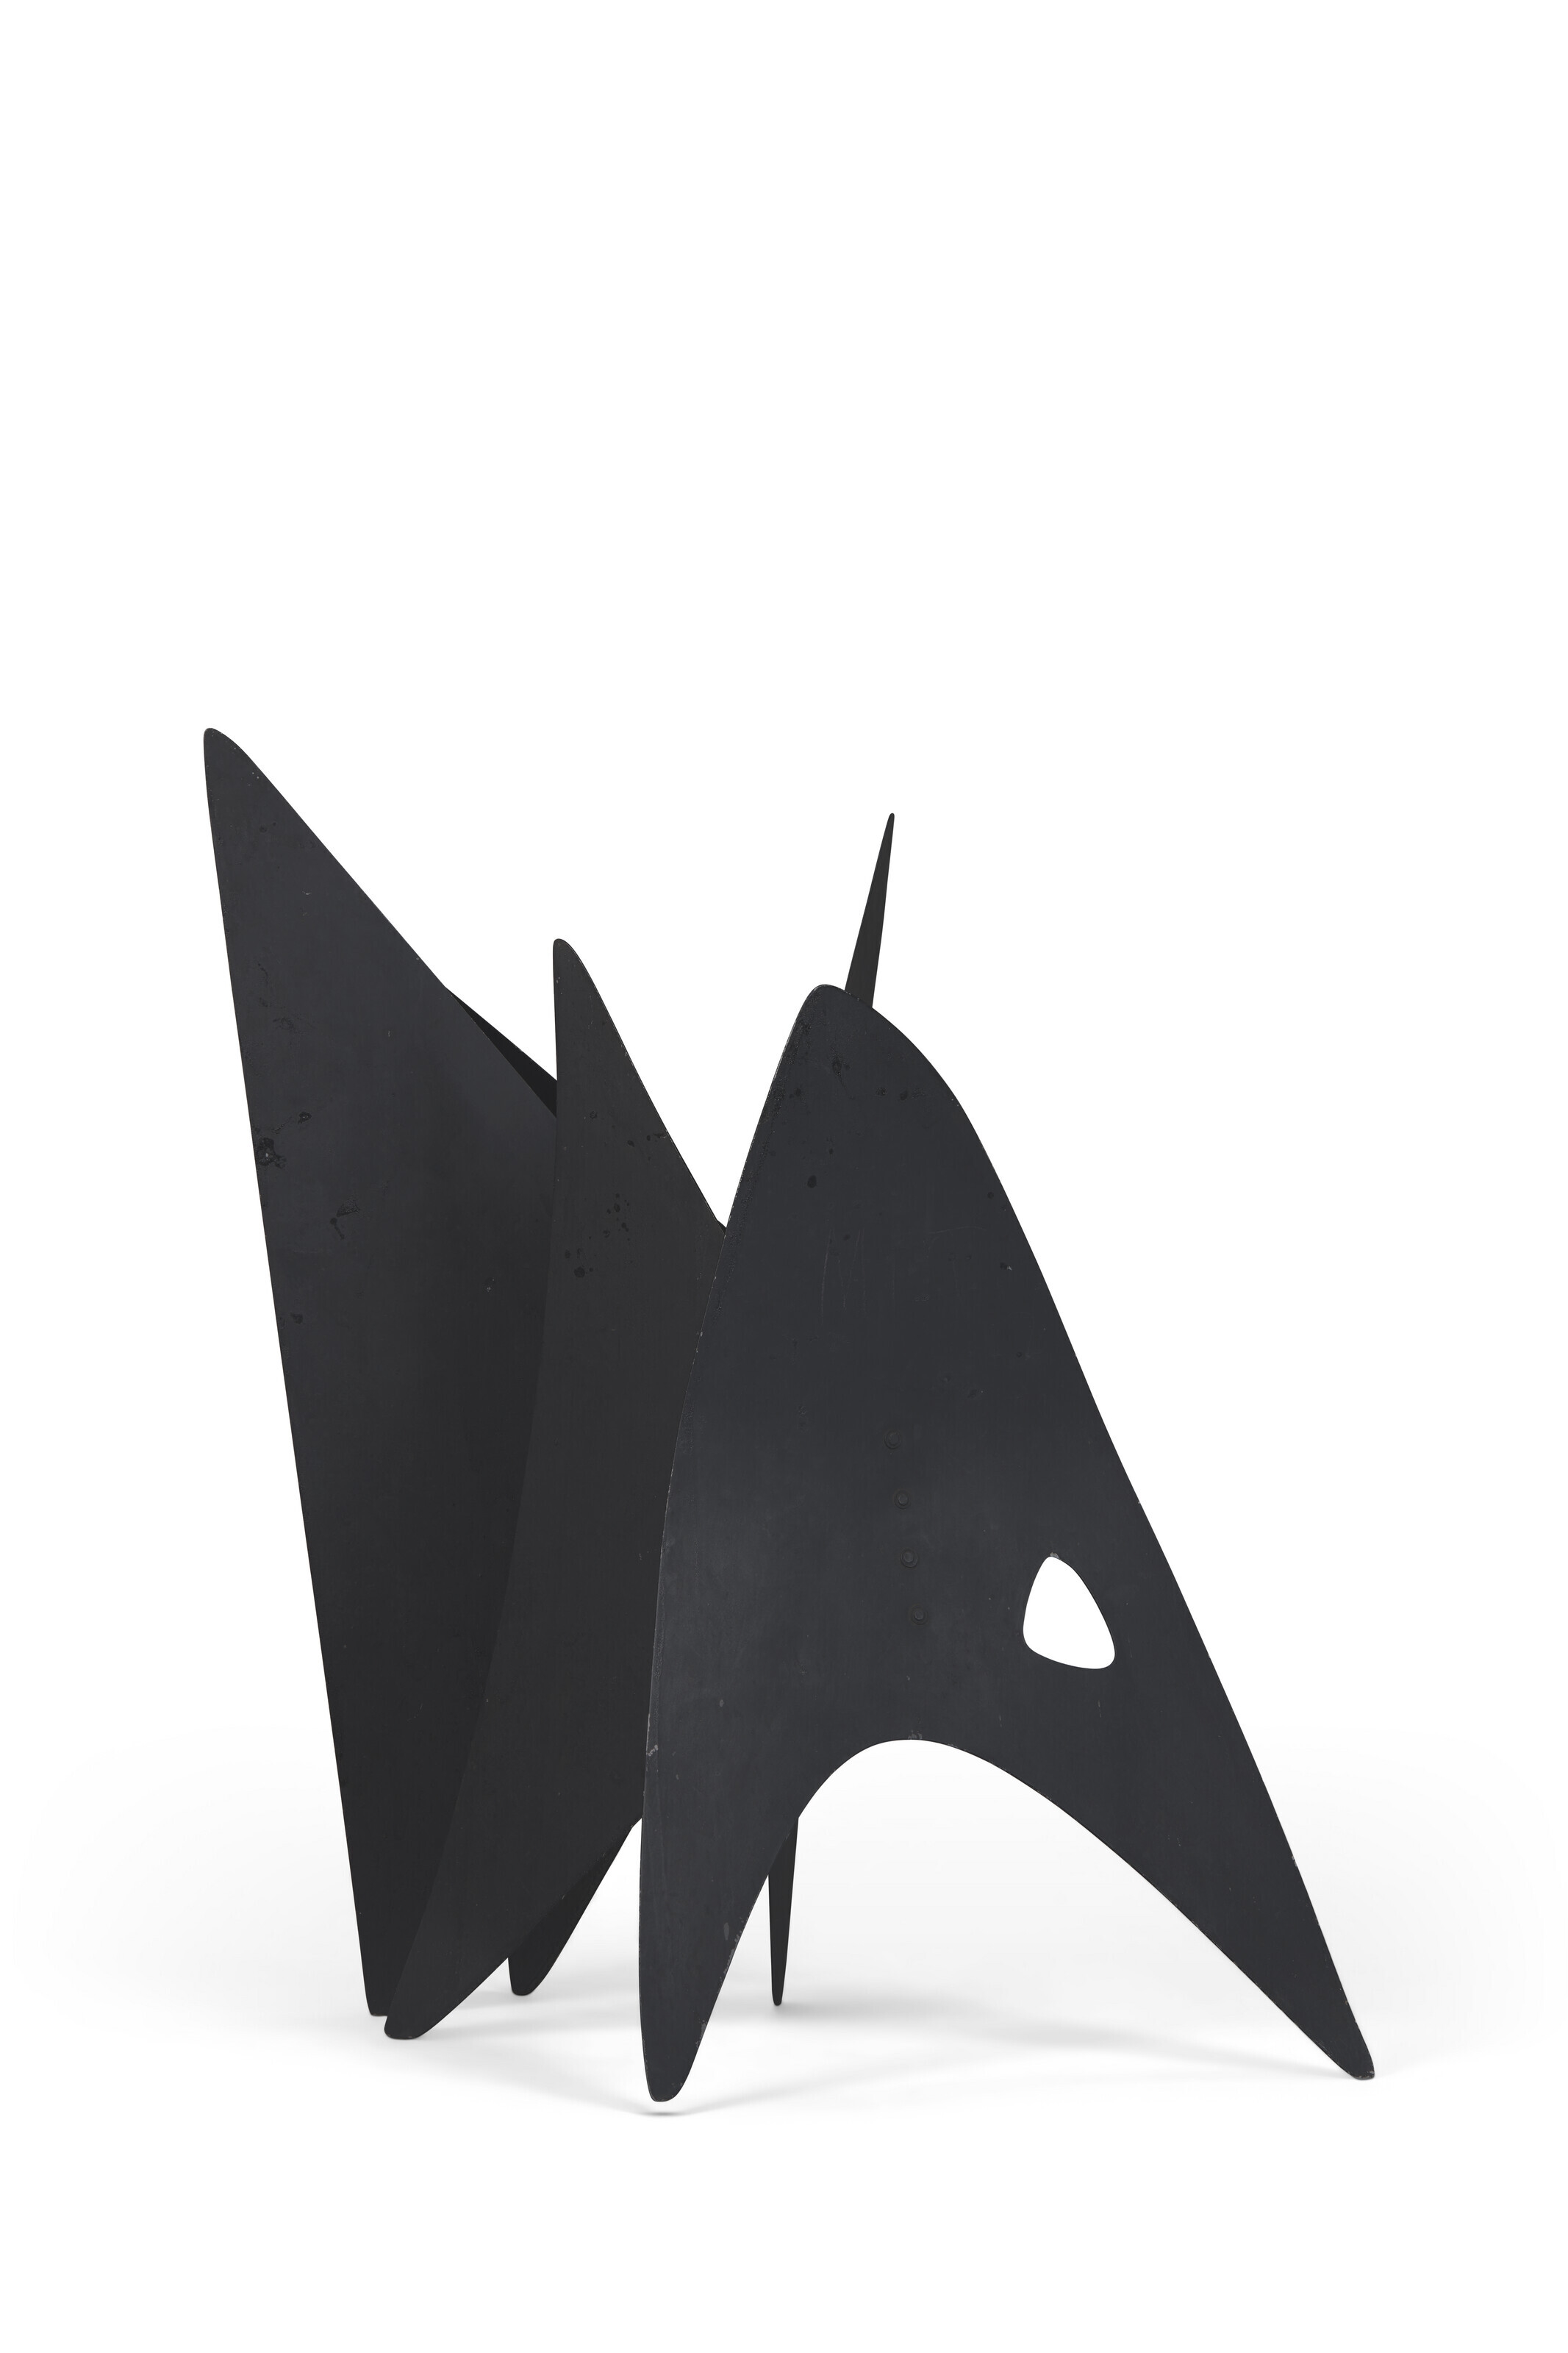 Alexander Calder | Triangles (1957) | MutualArt